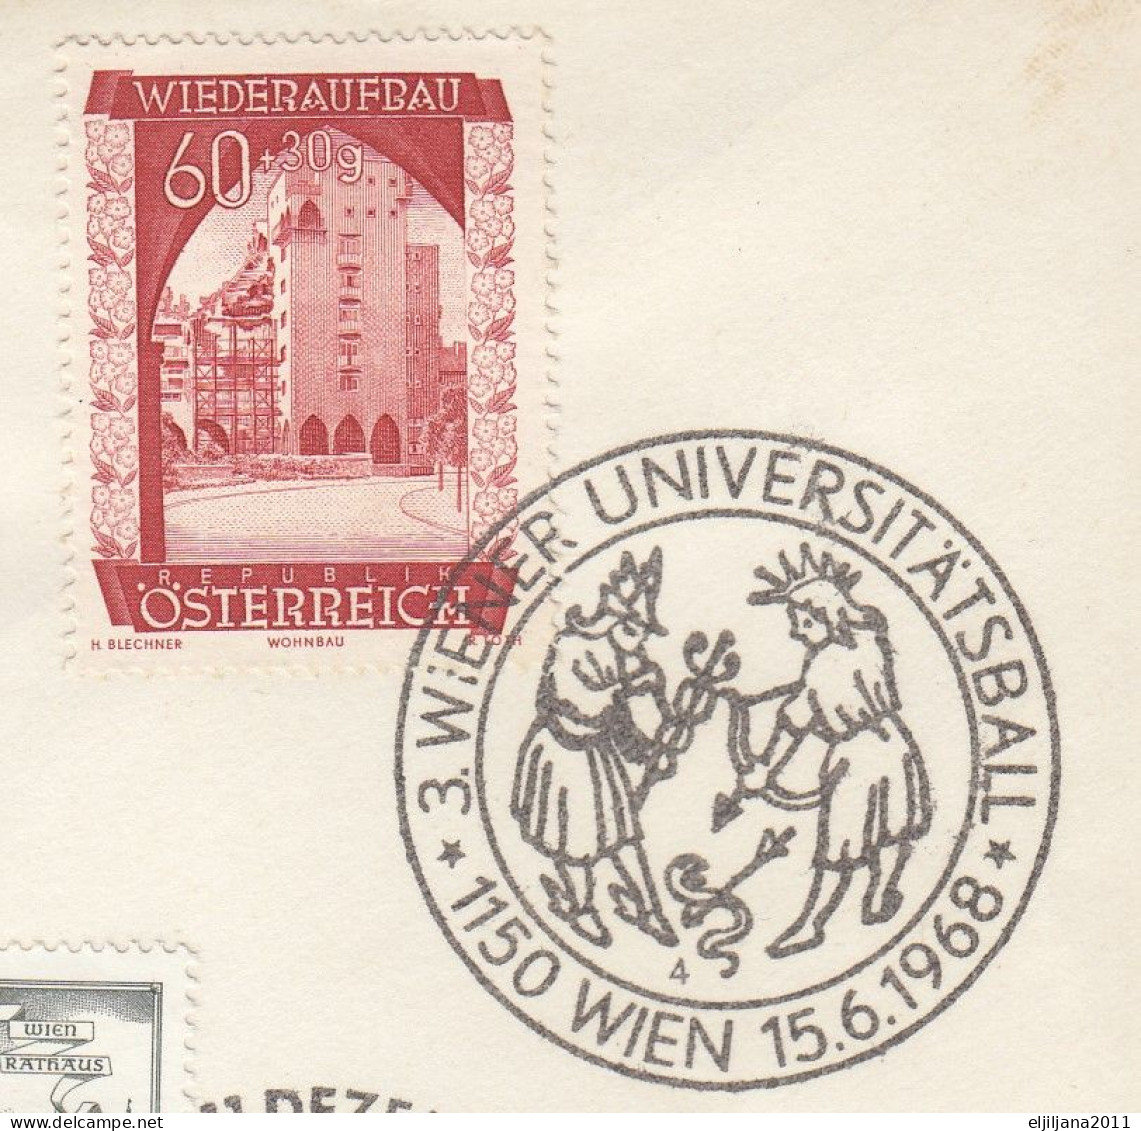 ⁕ Austria 1968 ⁕ WIEN - Nice Envelope With Commemorative Postmarks ⁕ FLUGPOSTAUSSTELLUNG - Lettres & Documents